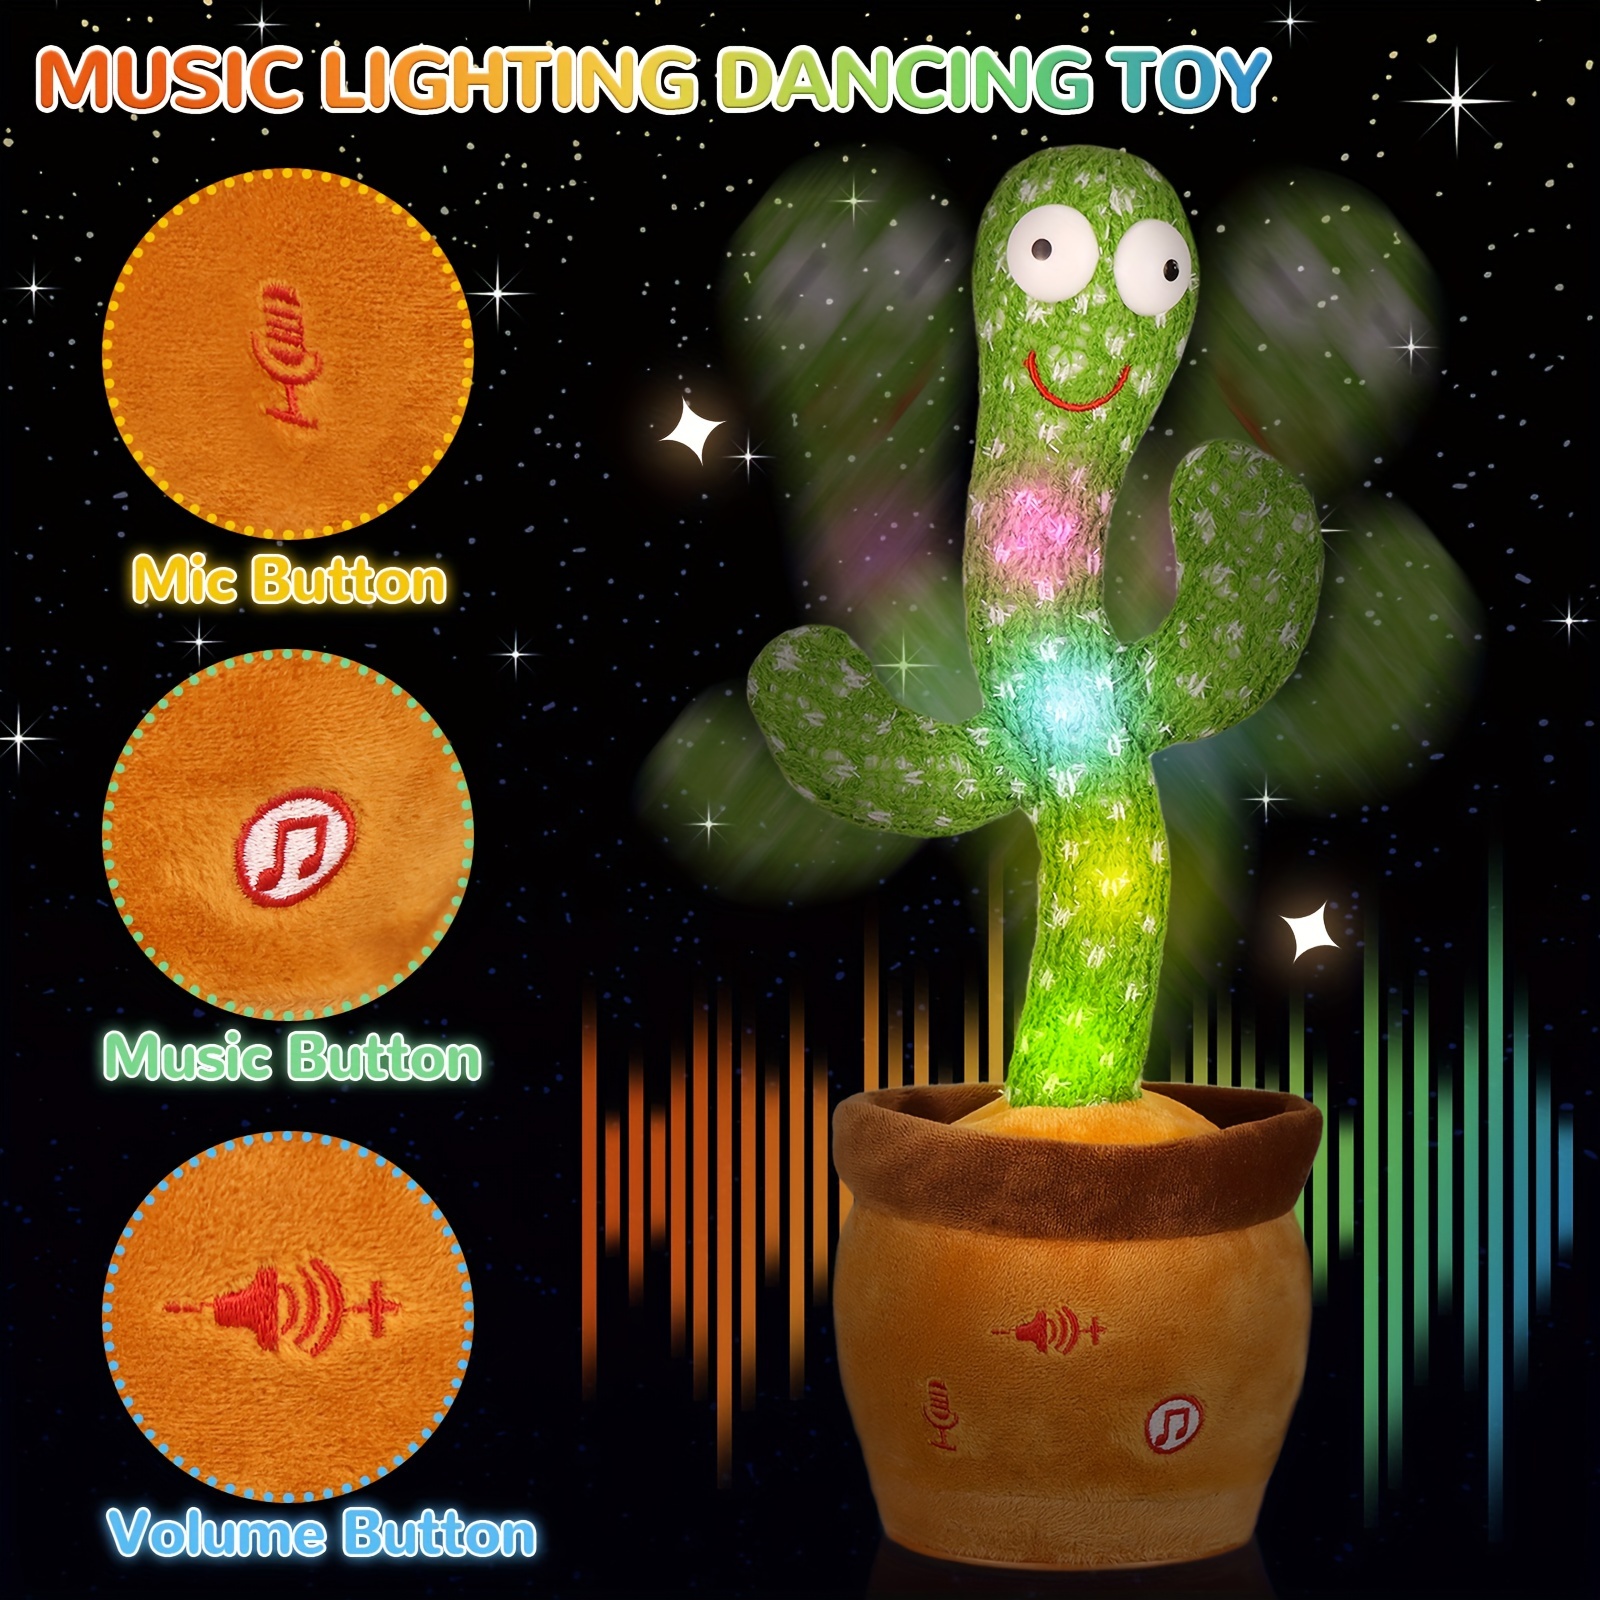 Enchanting Plush Cactus Toy For Babies Singing, Dancing, And